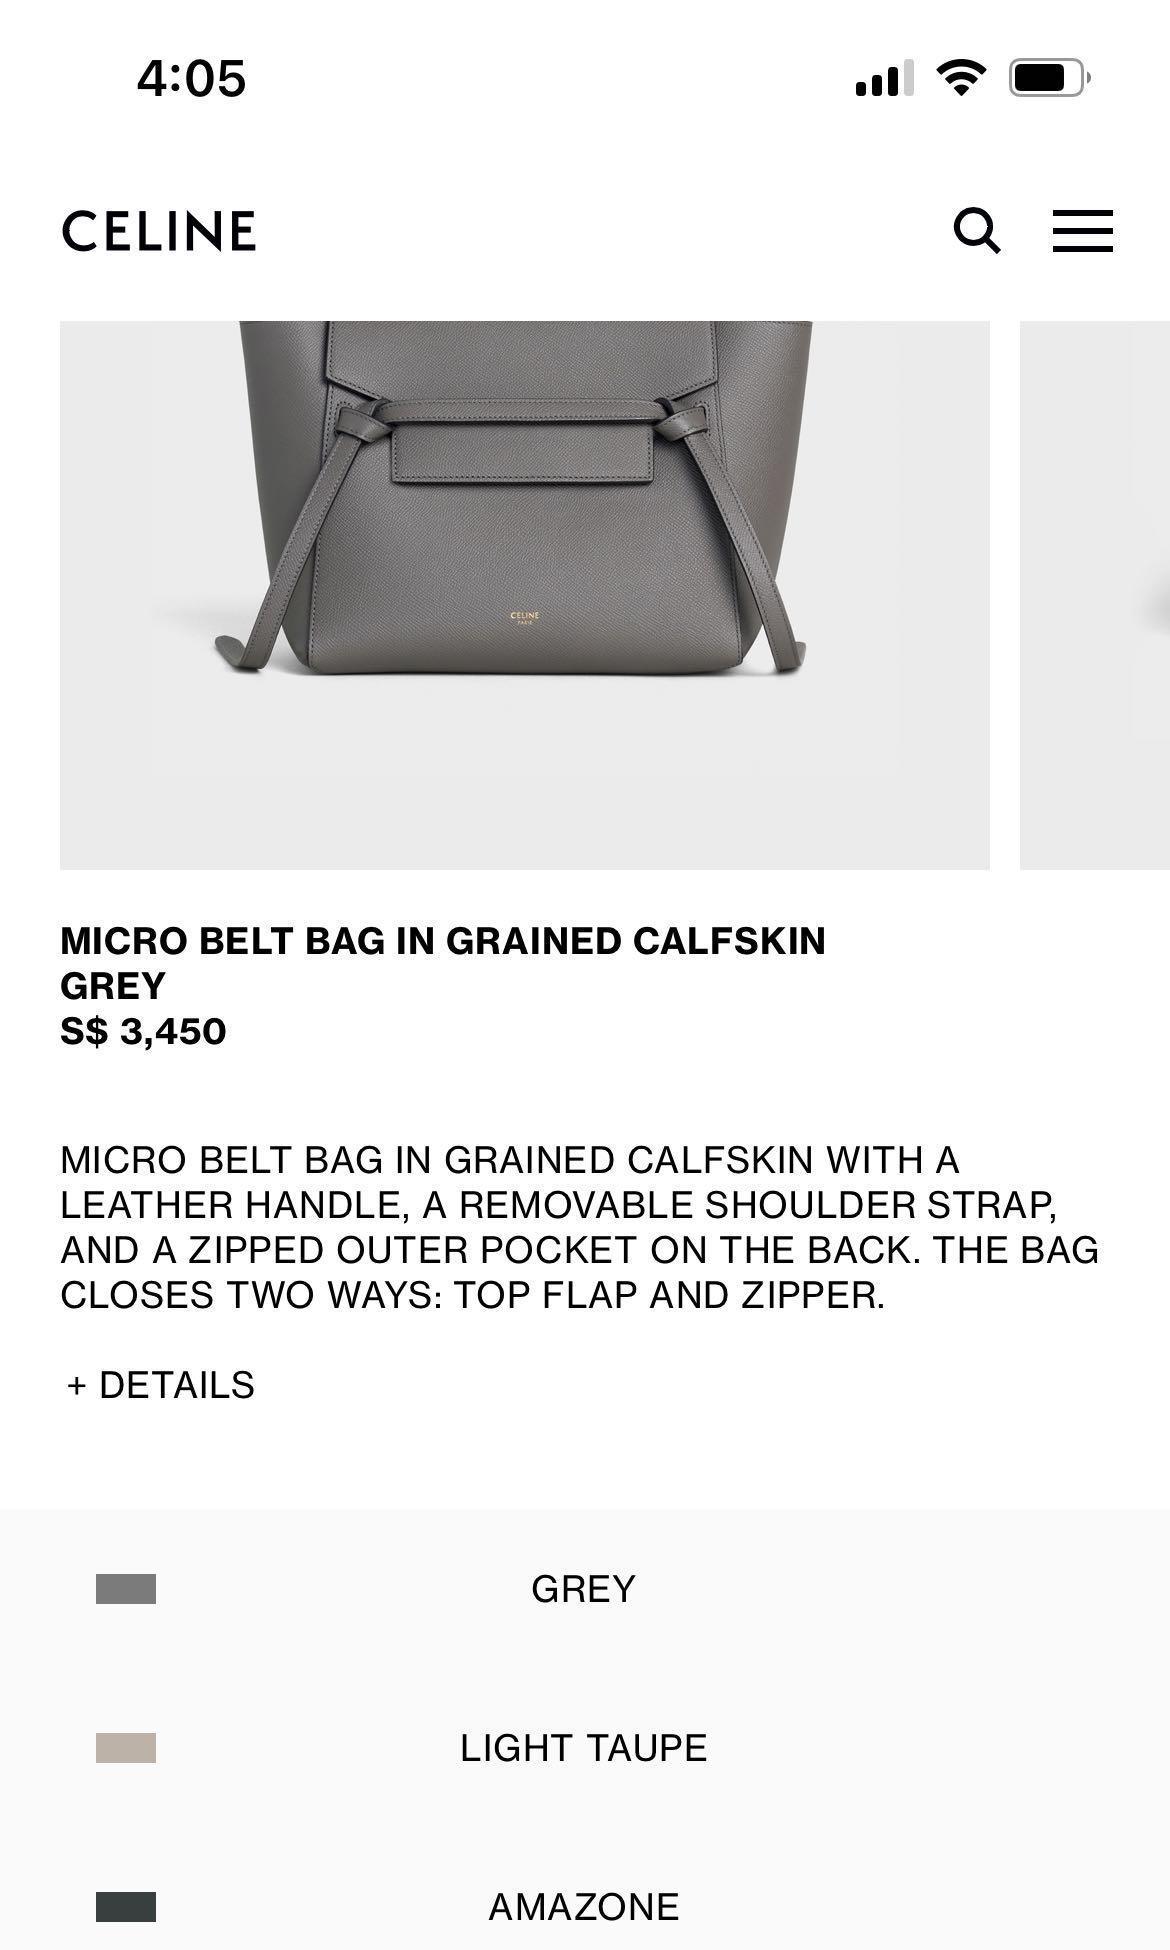 MICRO BELT BAG IN GRAINED CALFSKIN - GREY